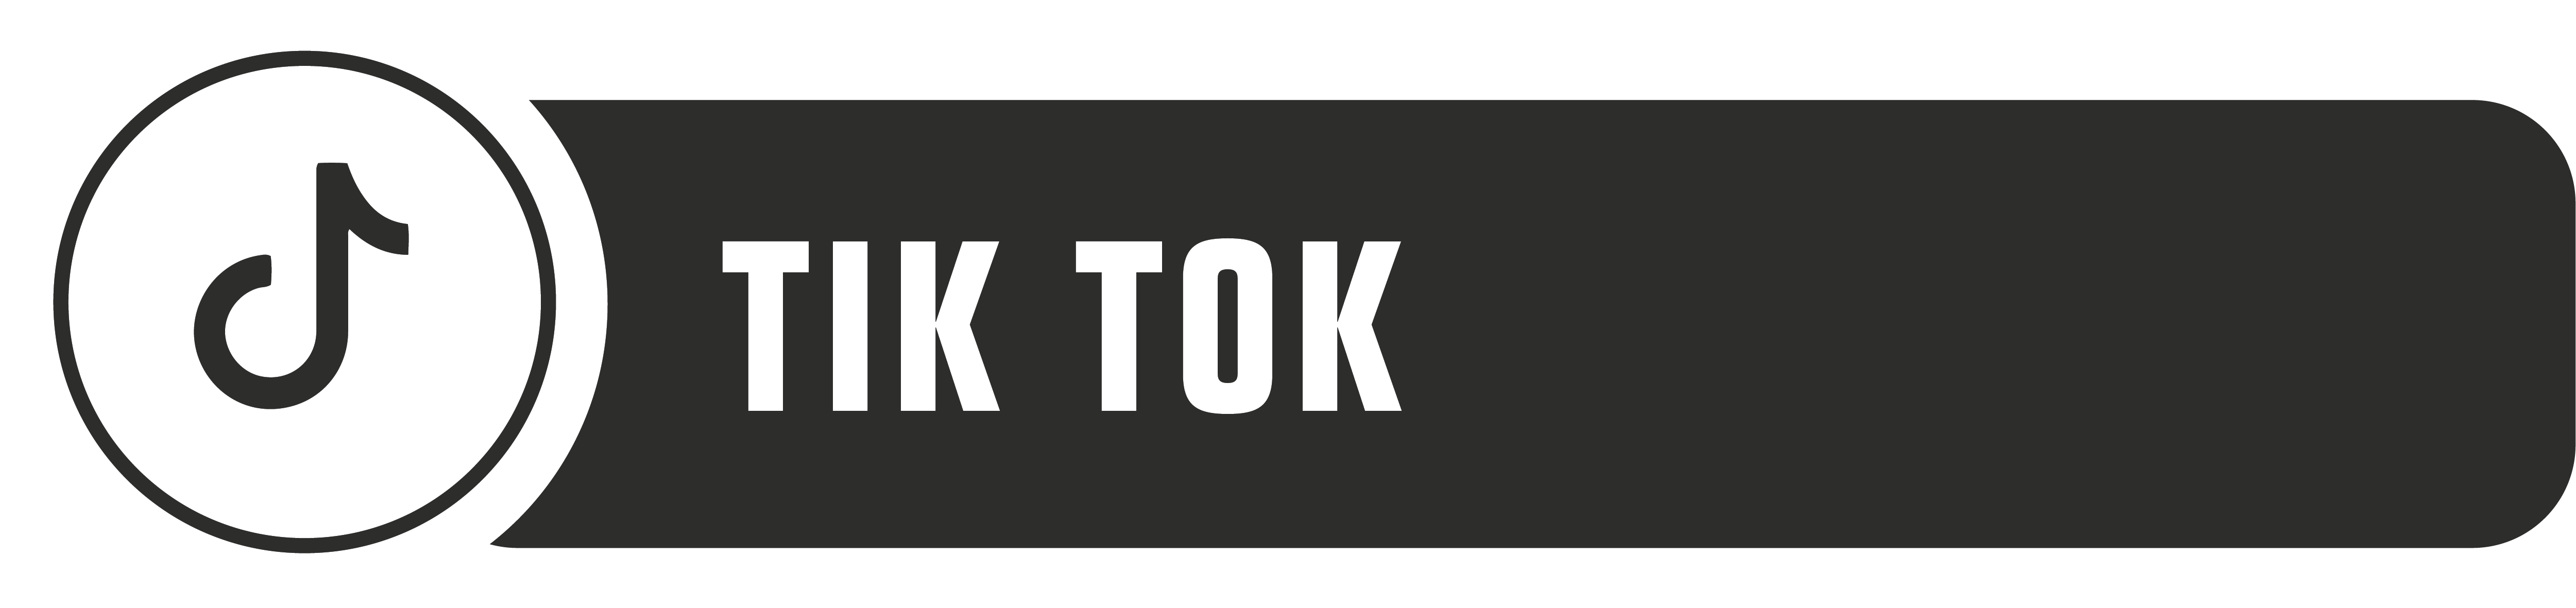 Follow us on TikTok